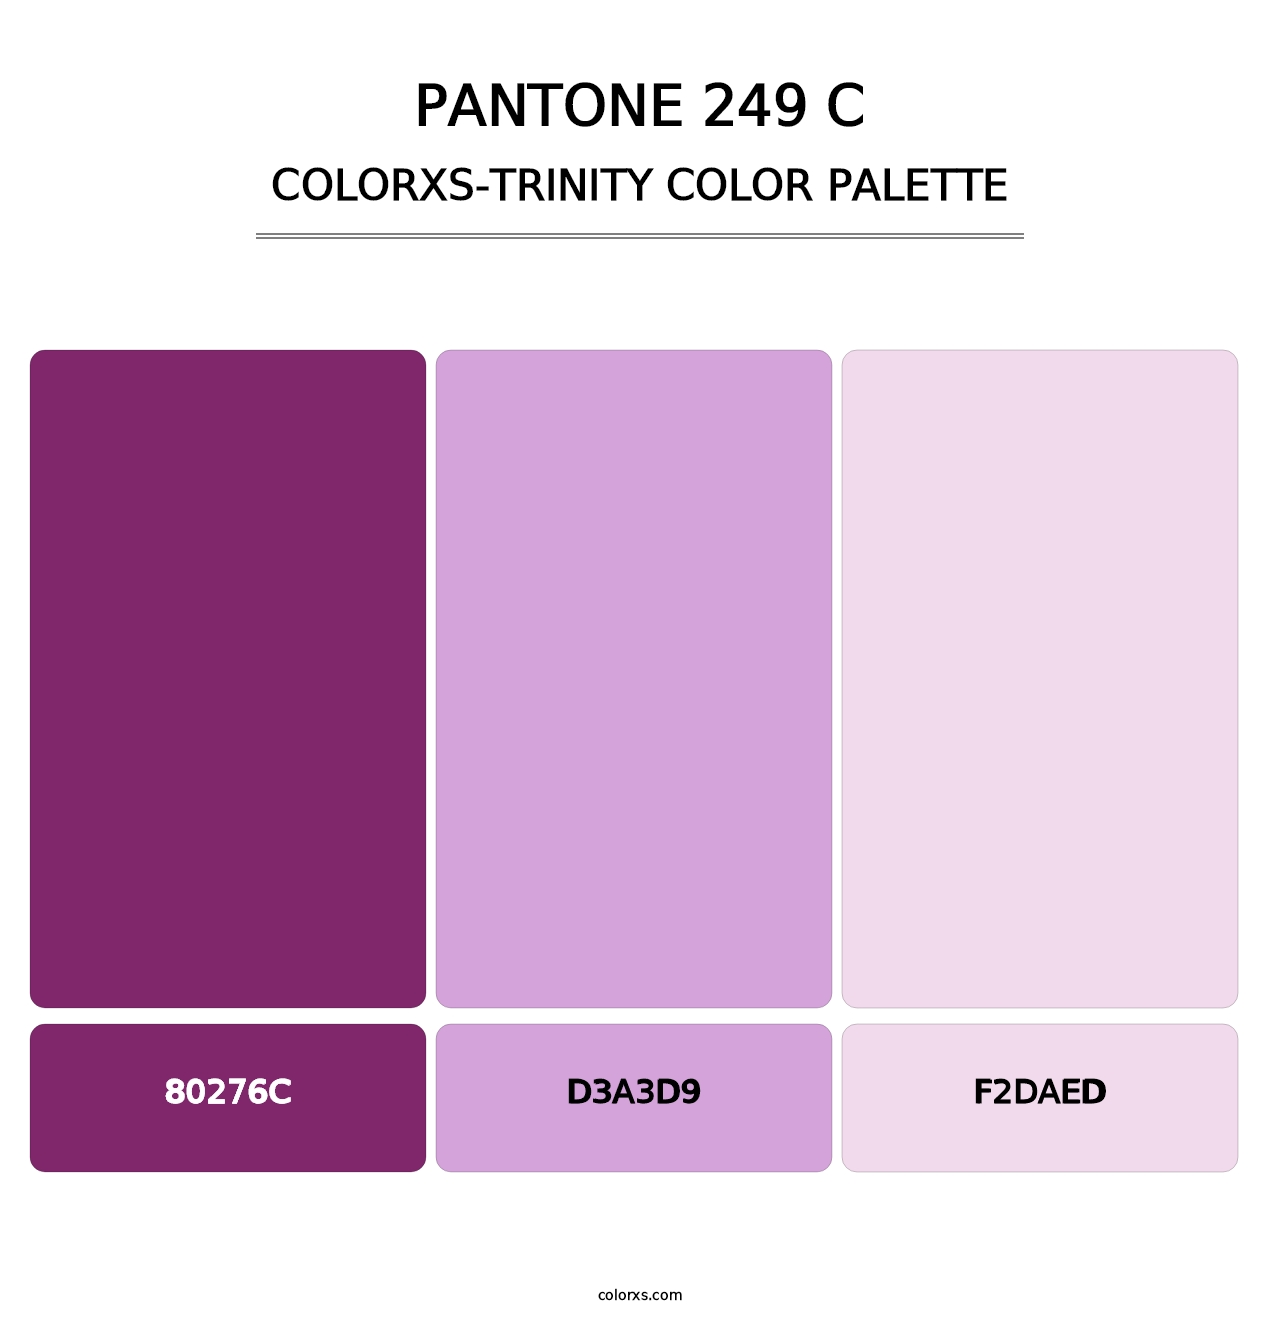 PANTONE 249 C - Colorxs Trinity Palette